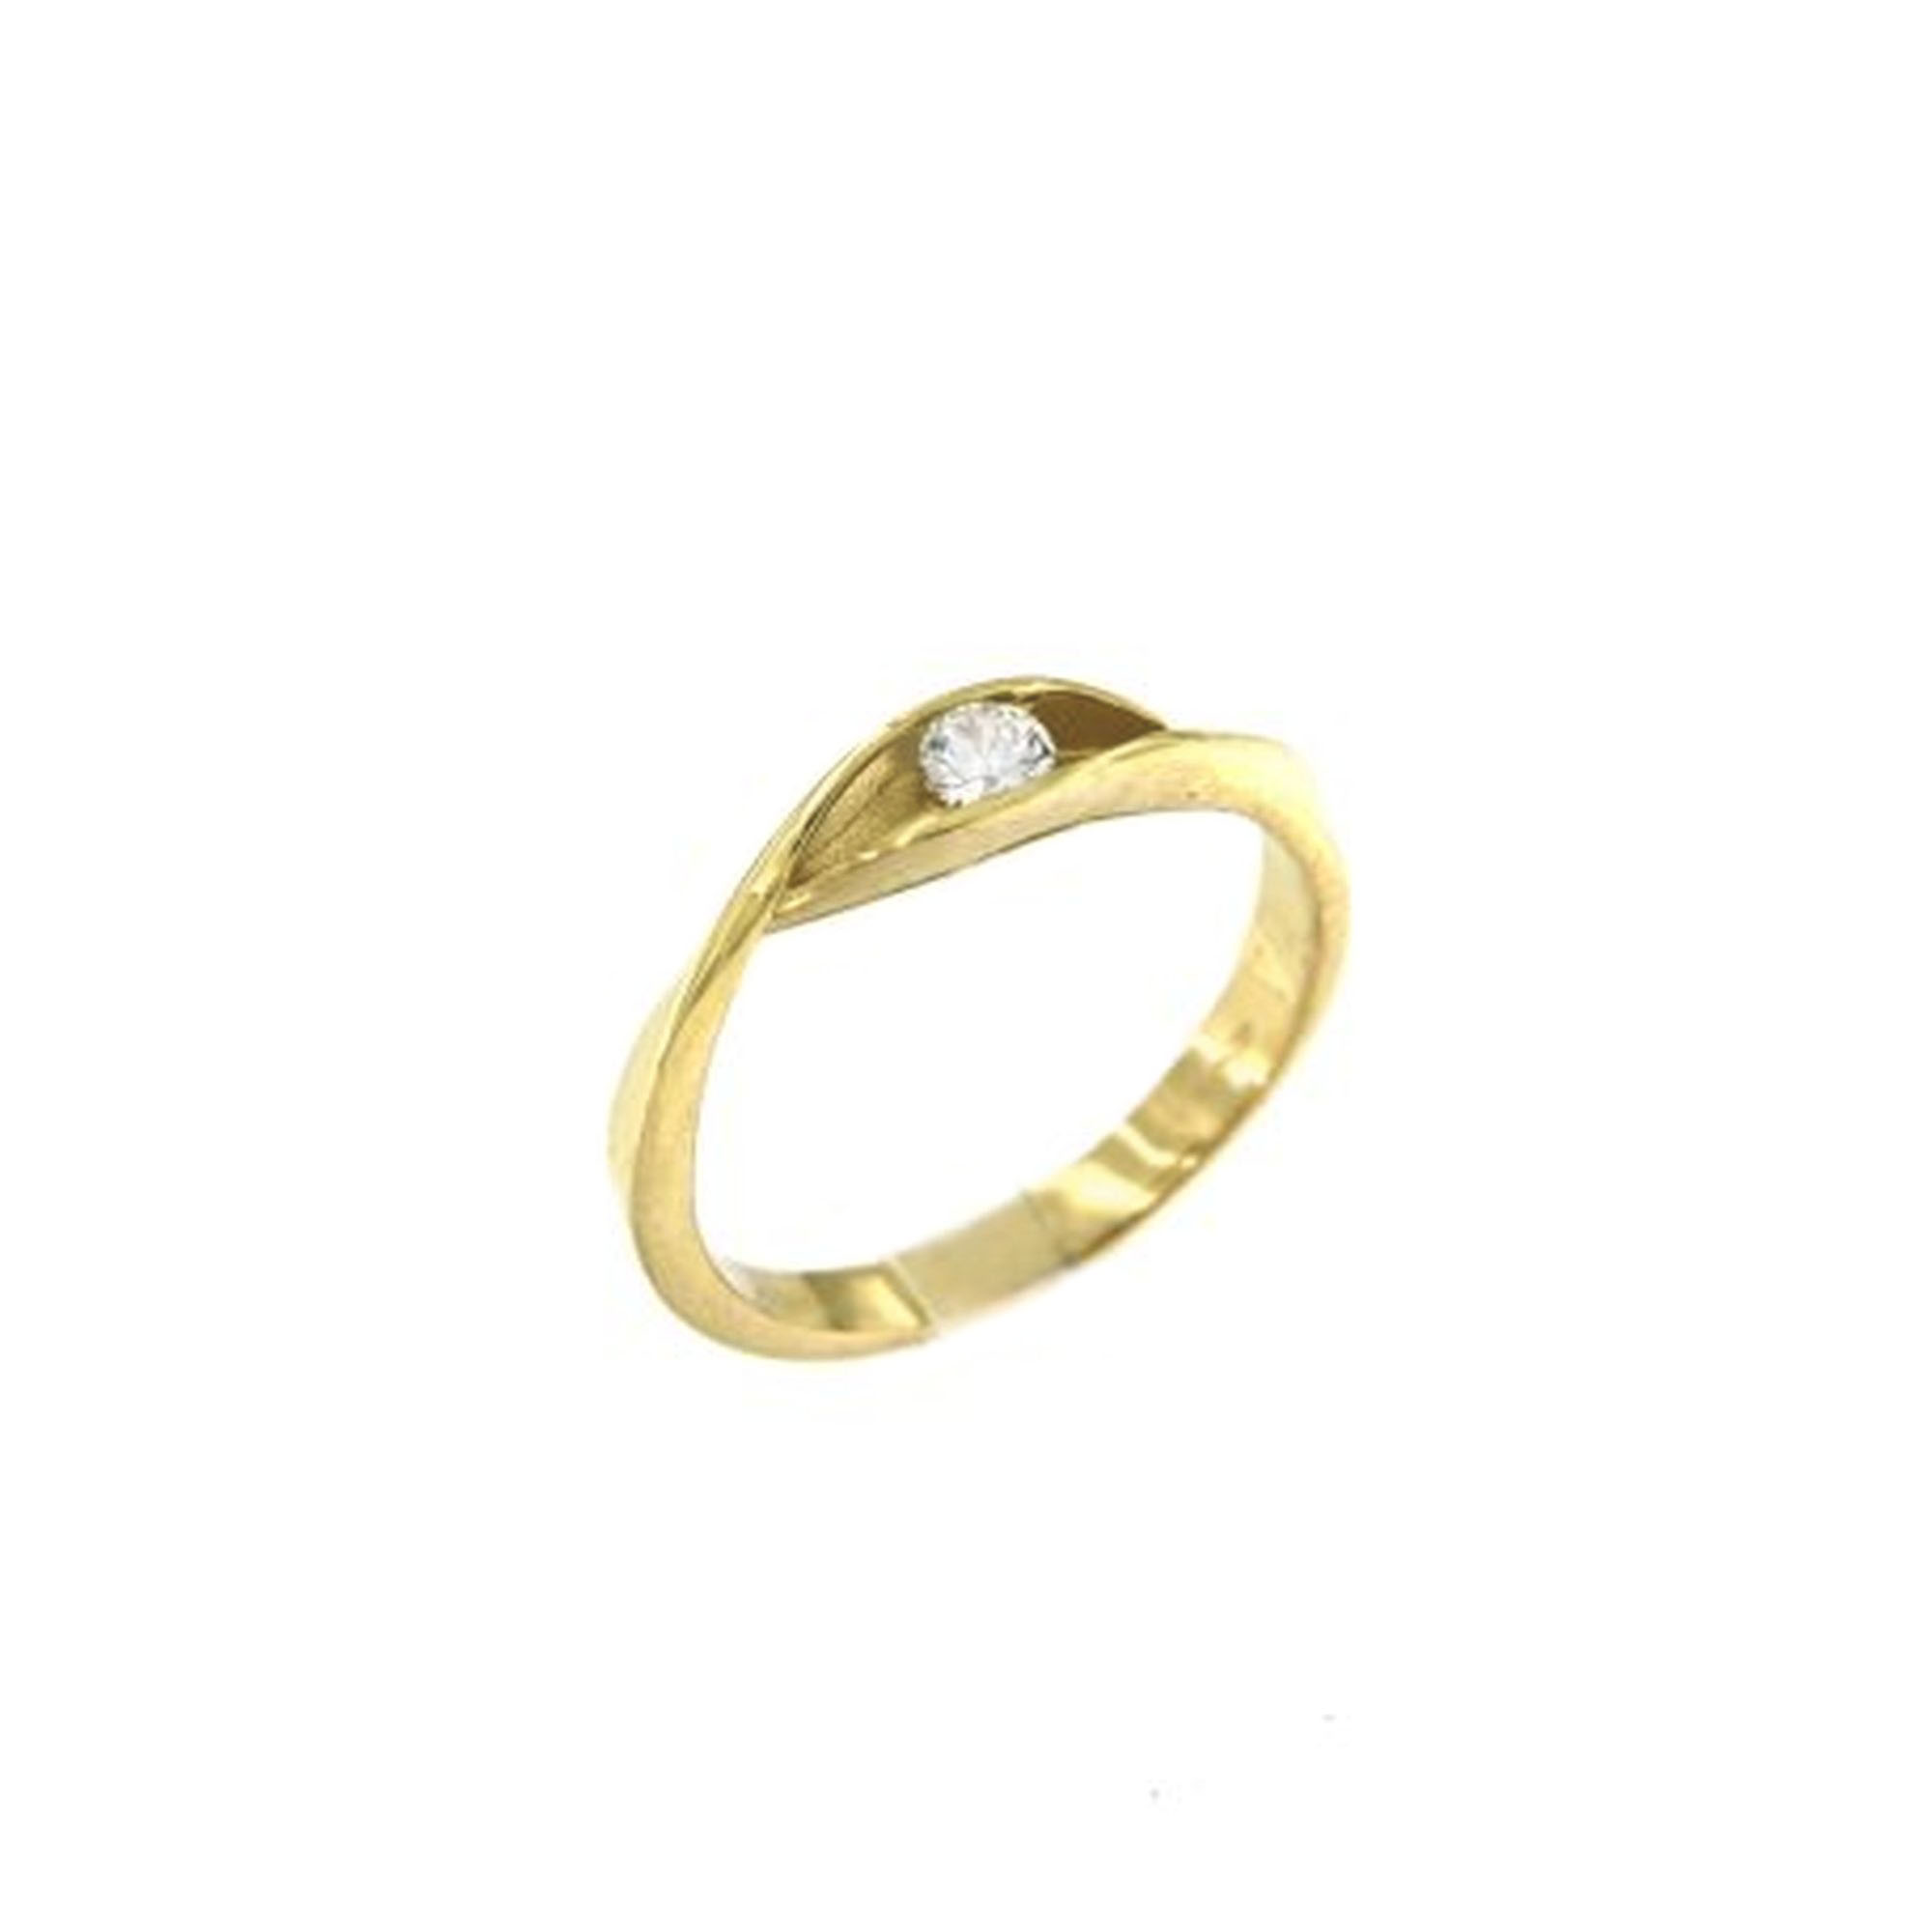 MOISS Moiss prsten ze žlutého zlata ANETTA RA000198 Velikost 52 mm RA000198 + doprava ZDARMA